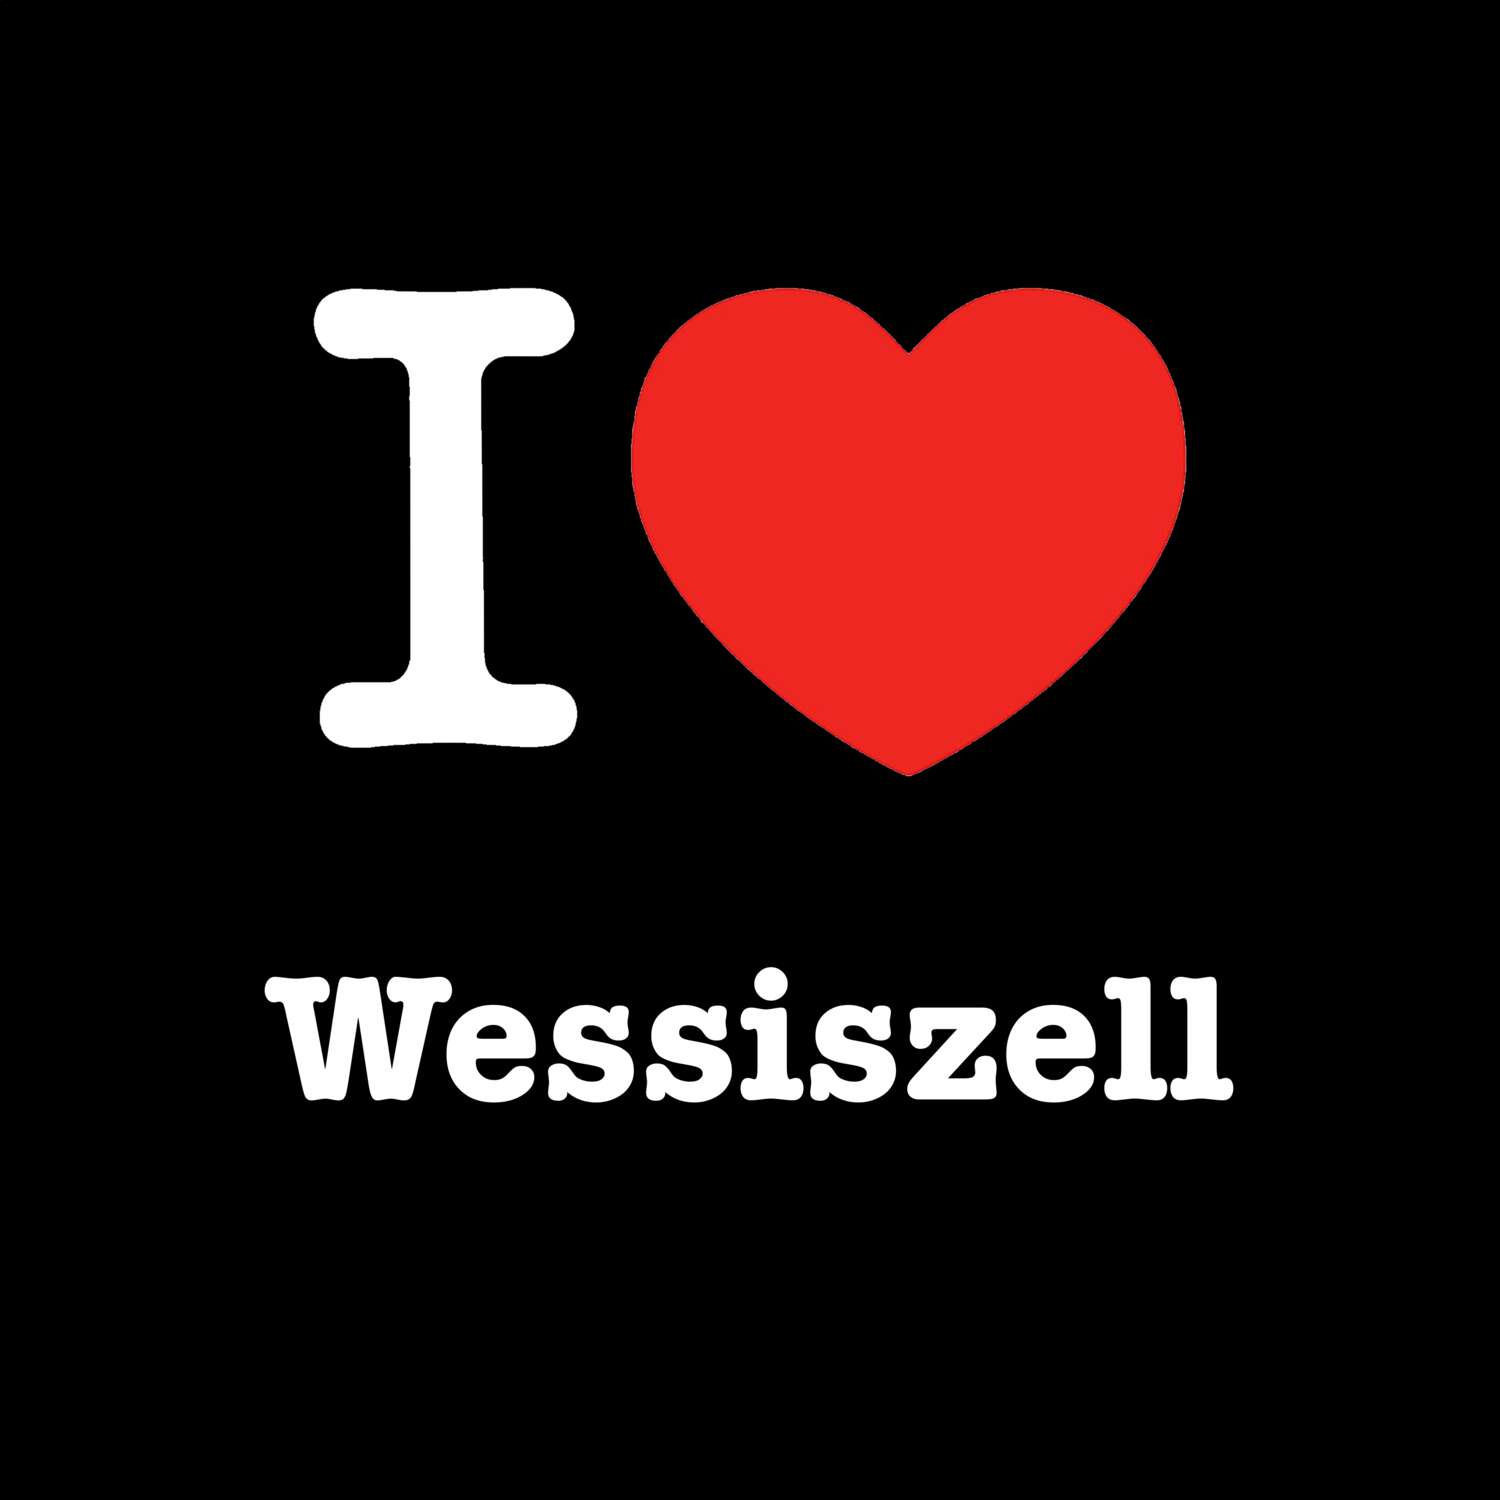 Wessiszell T-Shirt »I love«